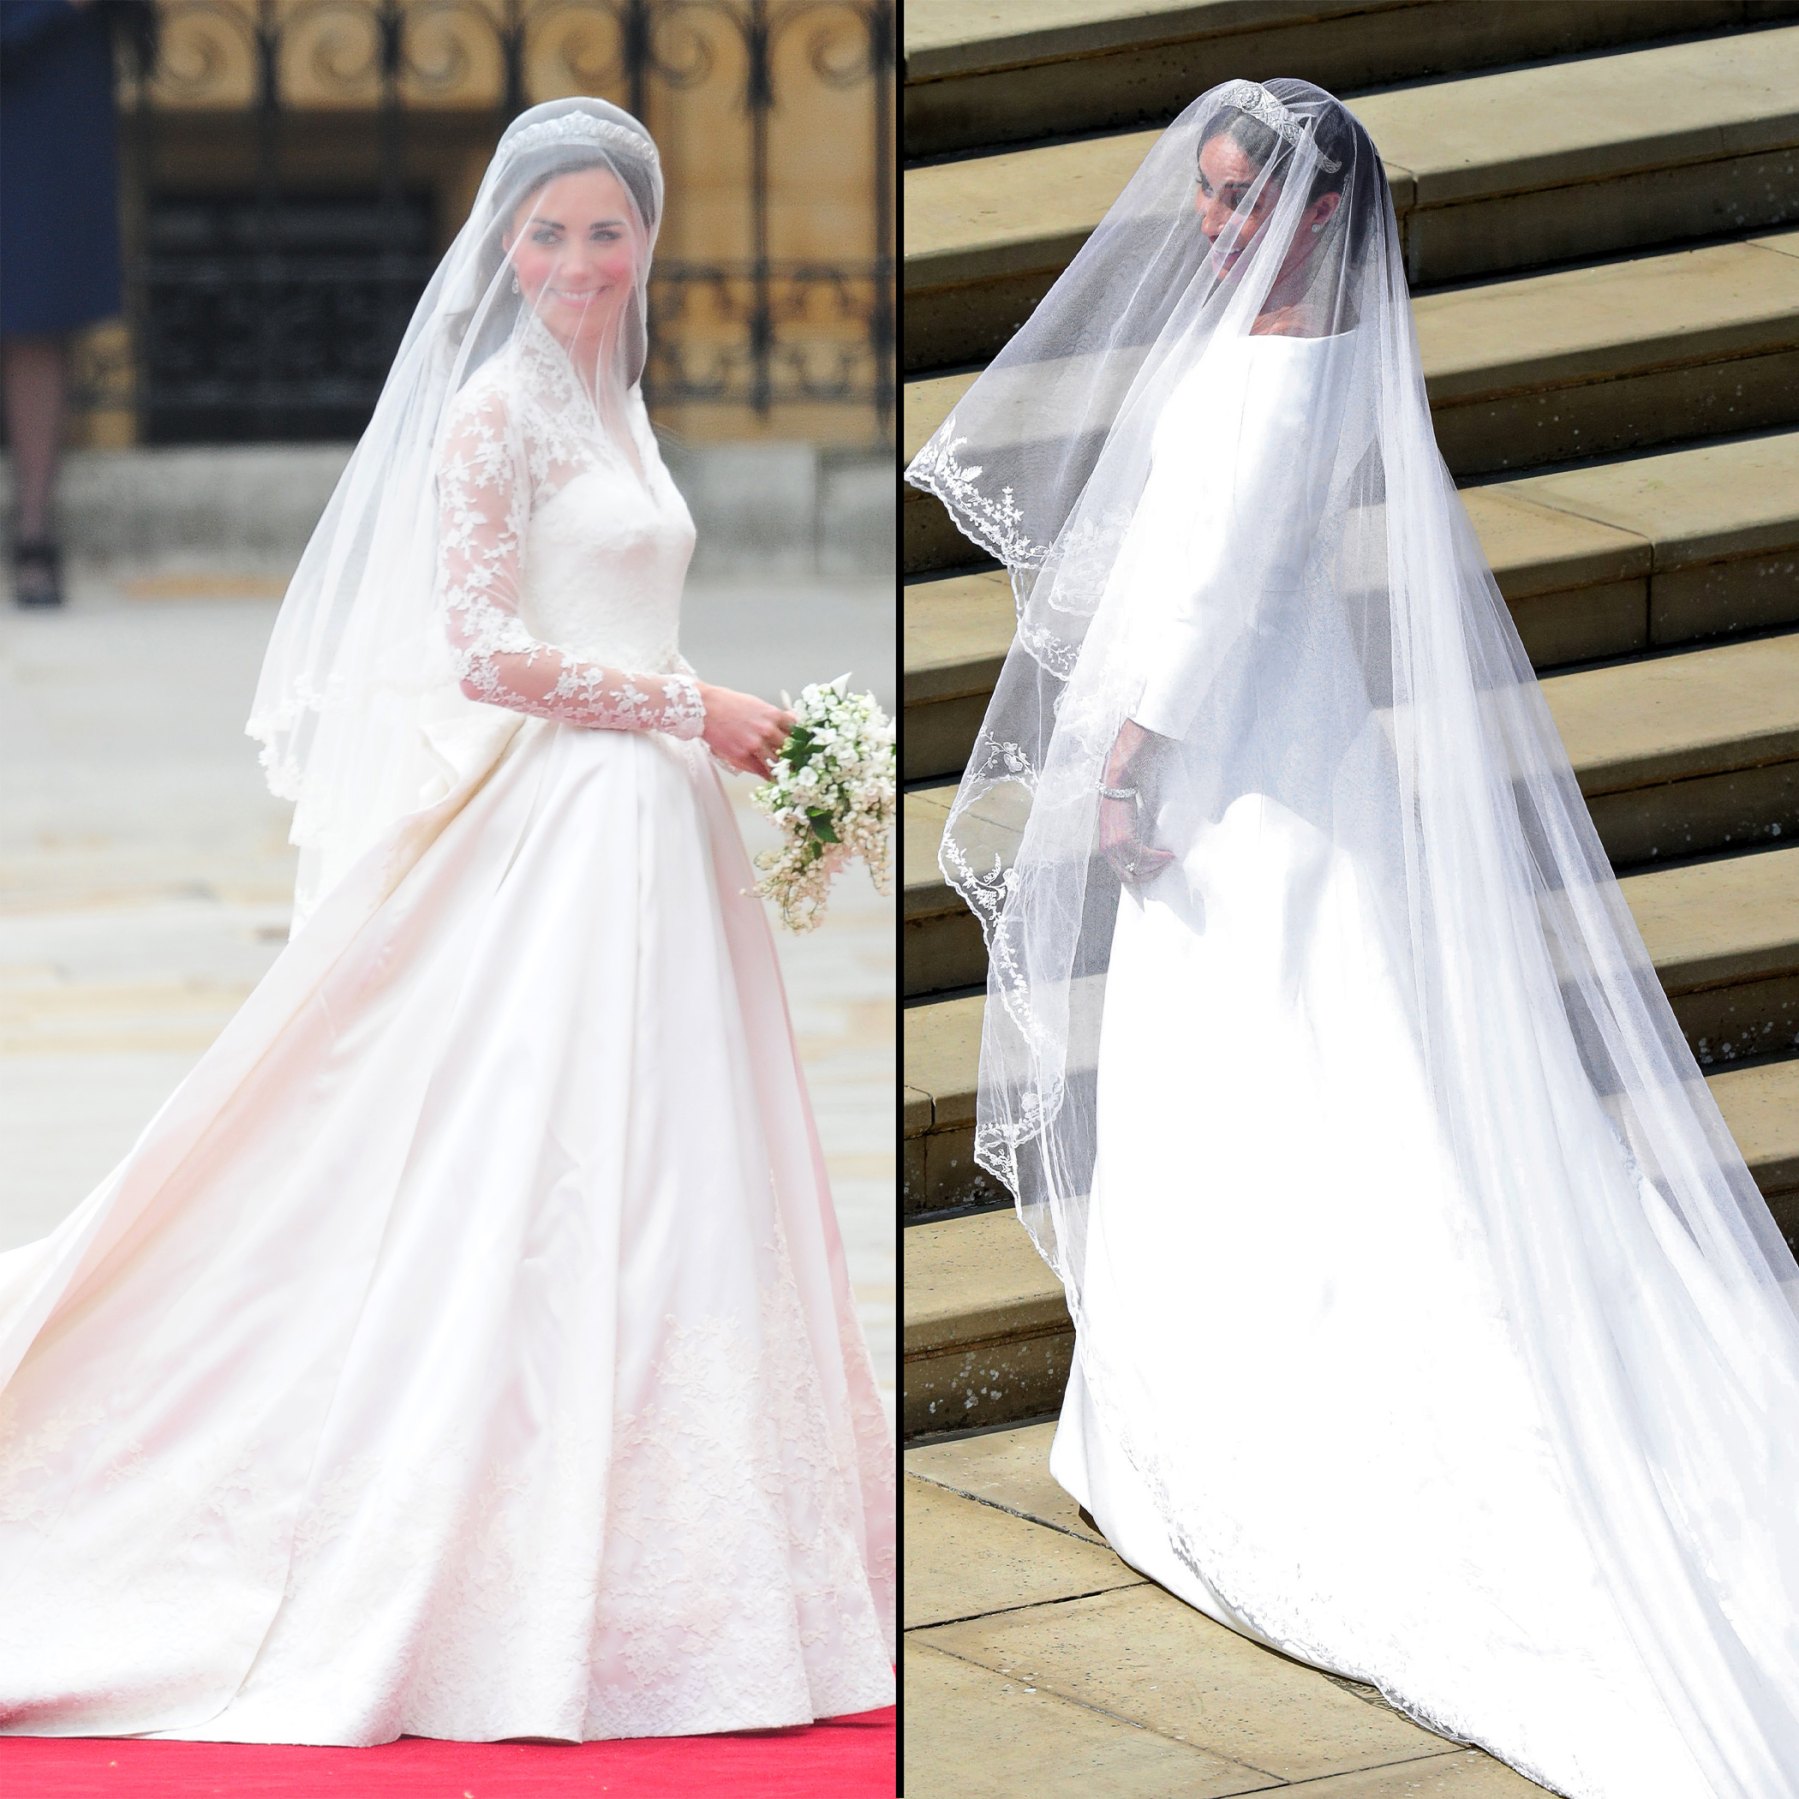 Most Amazing Royal Wedding Dresses: Photos